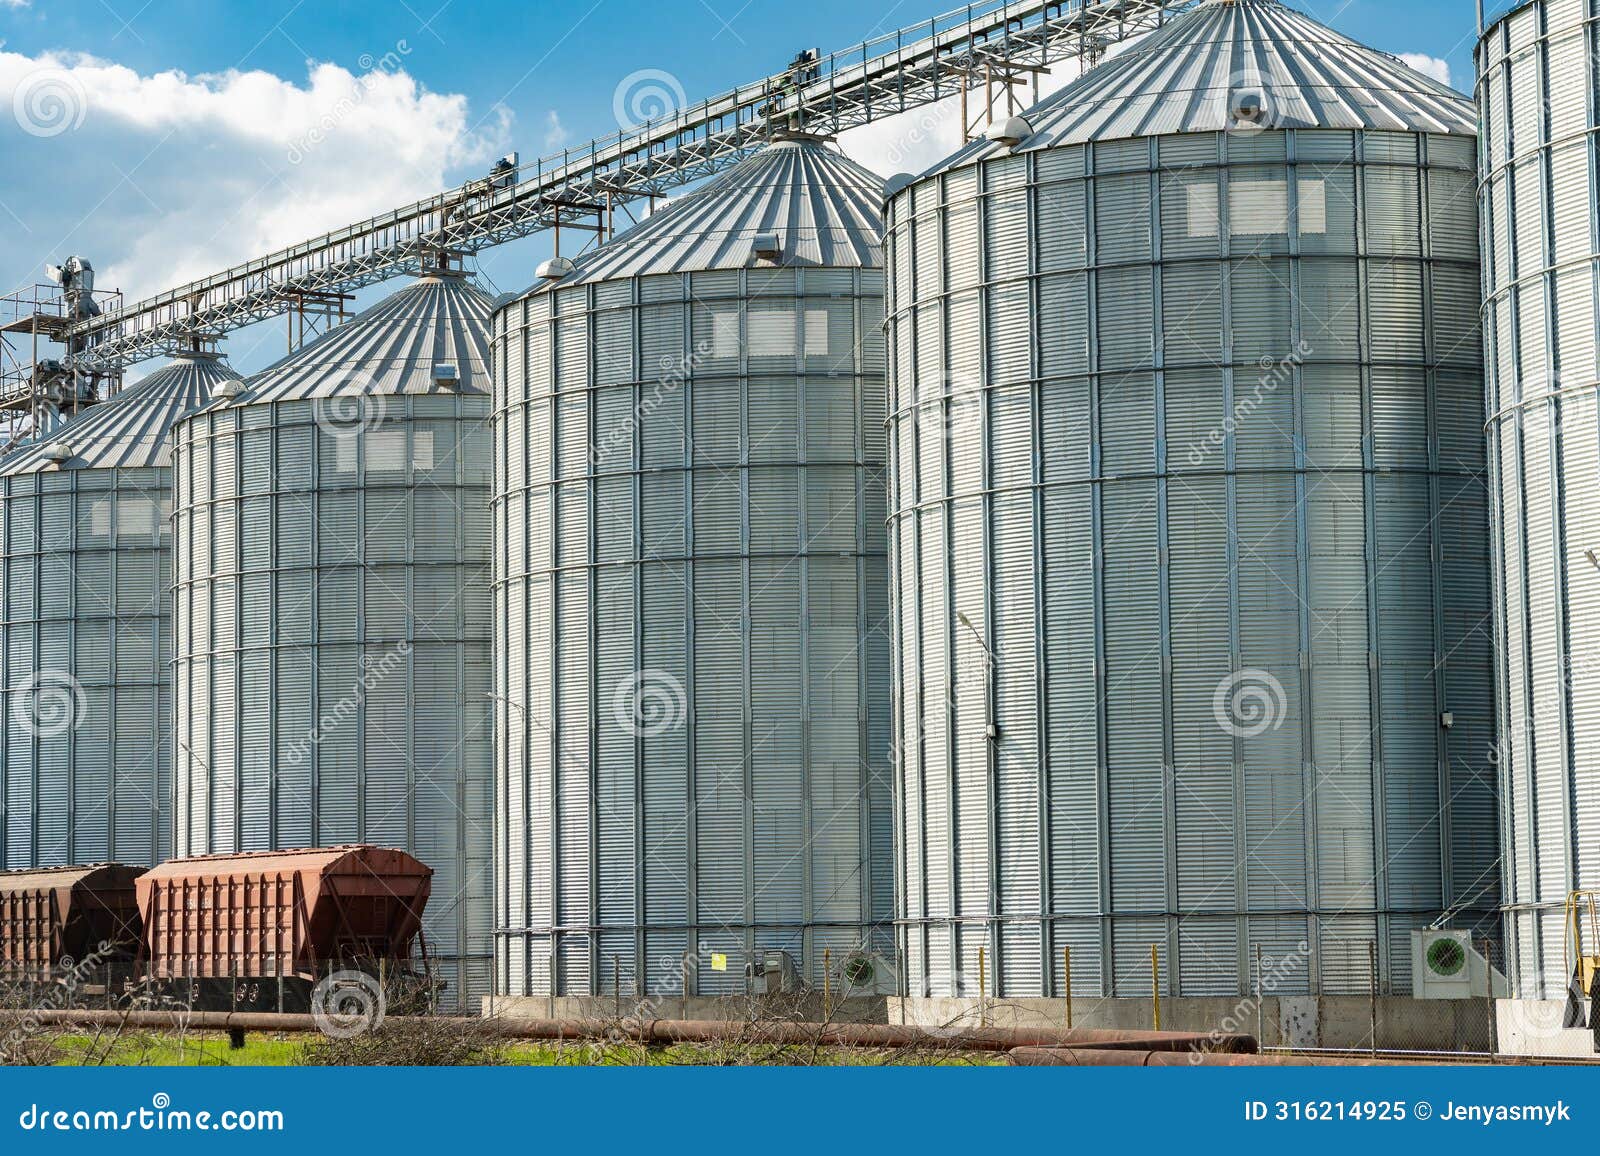 grain storage. modern steel agricultural grain granary silos. agribusiness.